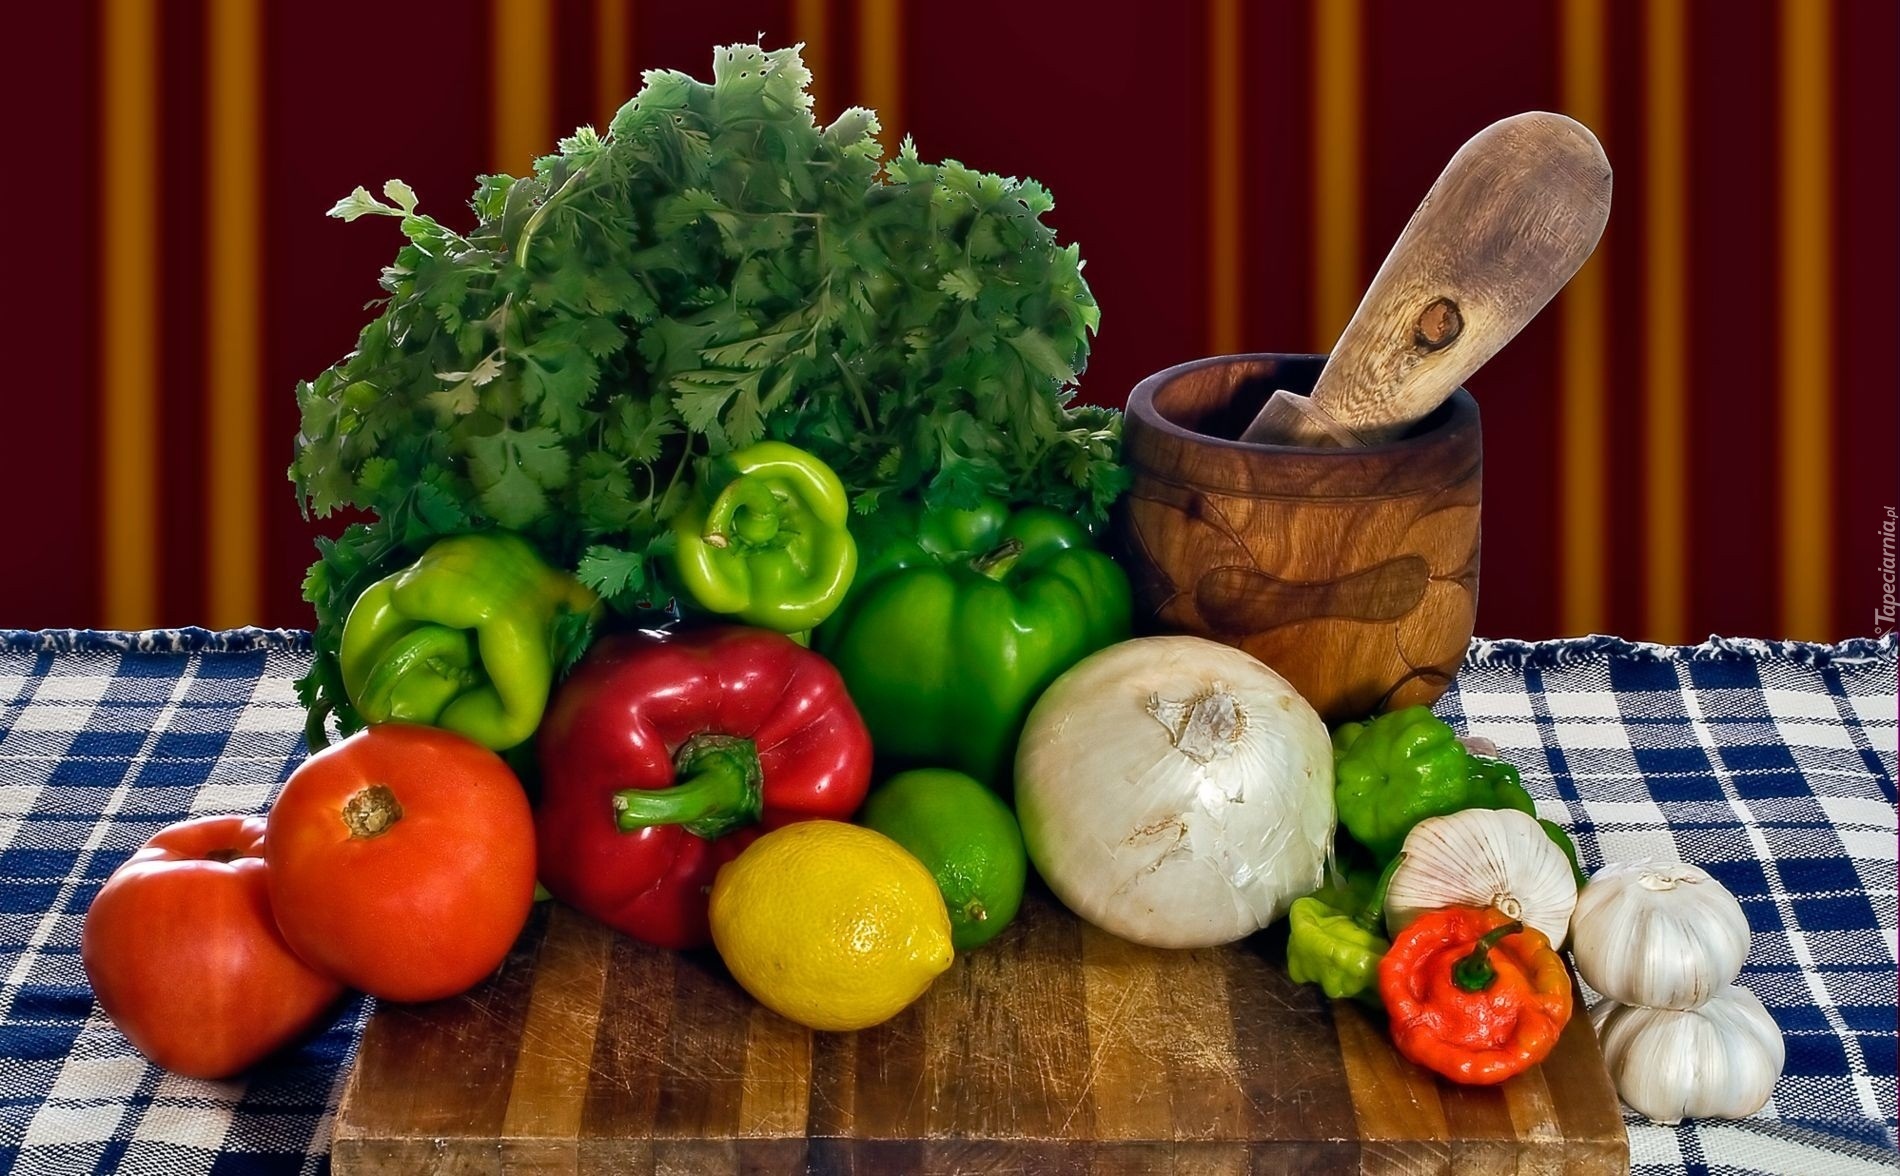 Баклажан лук чеснок морковь. Овощи "кухня". Овощи и зелень. Овощи на столе. Овощи и фрукты на кухне.